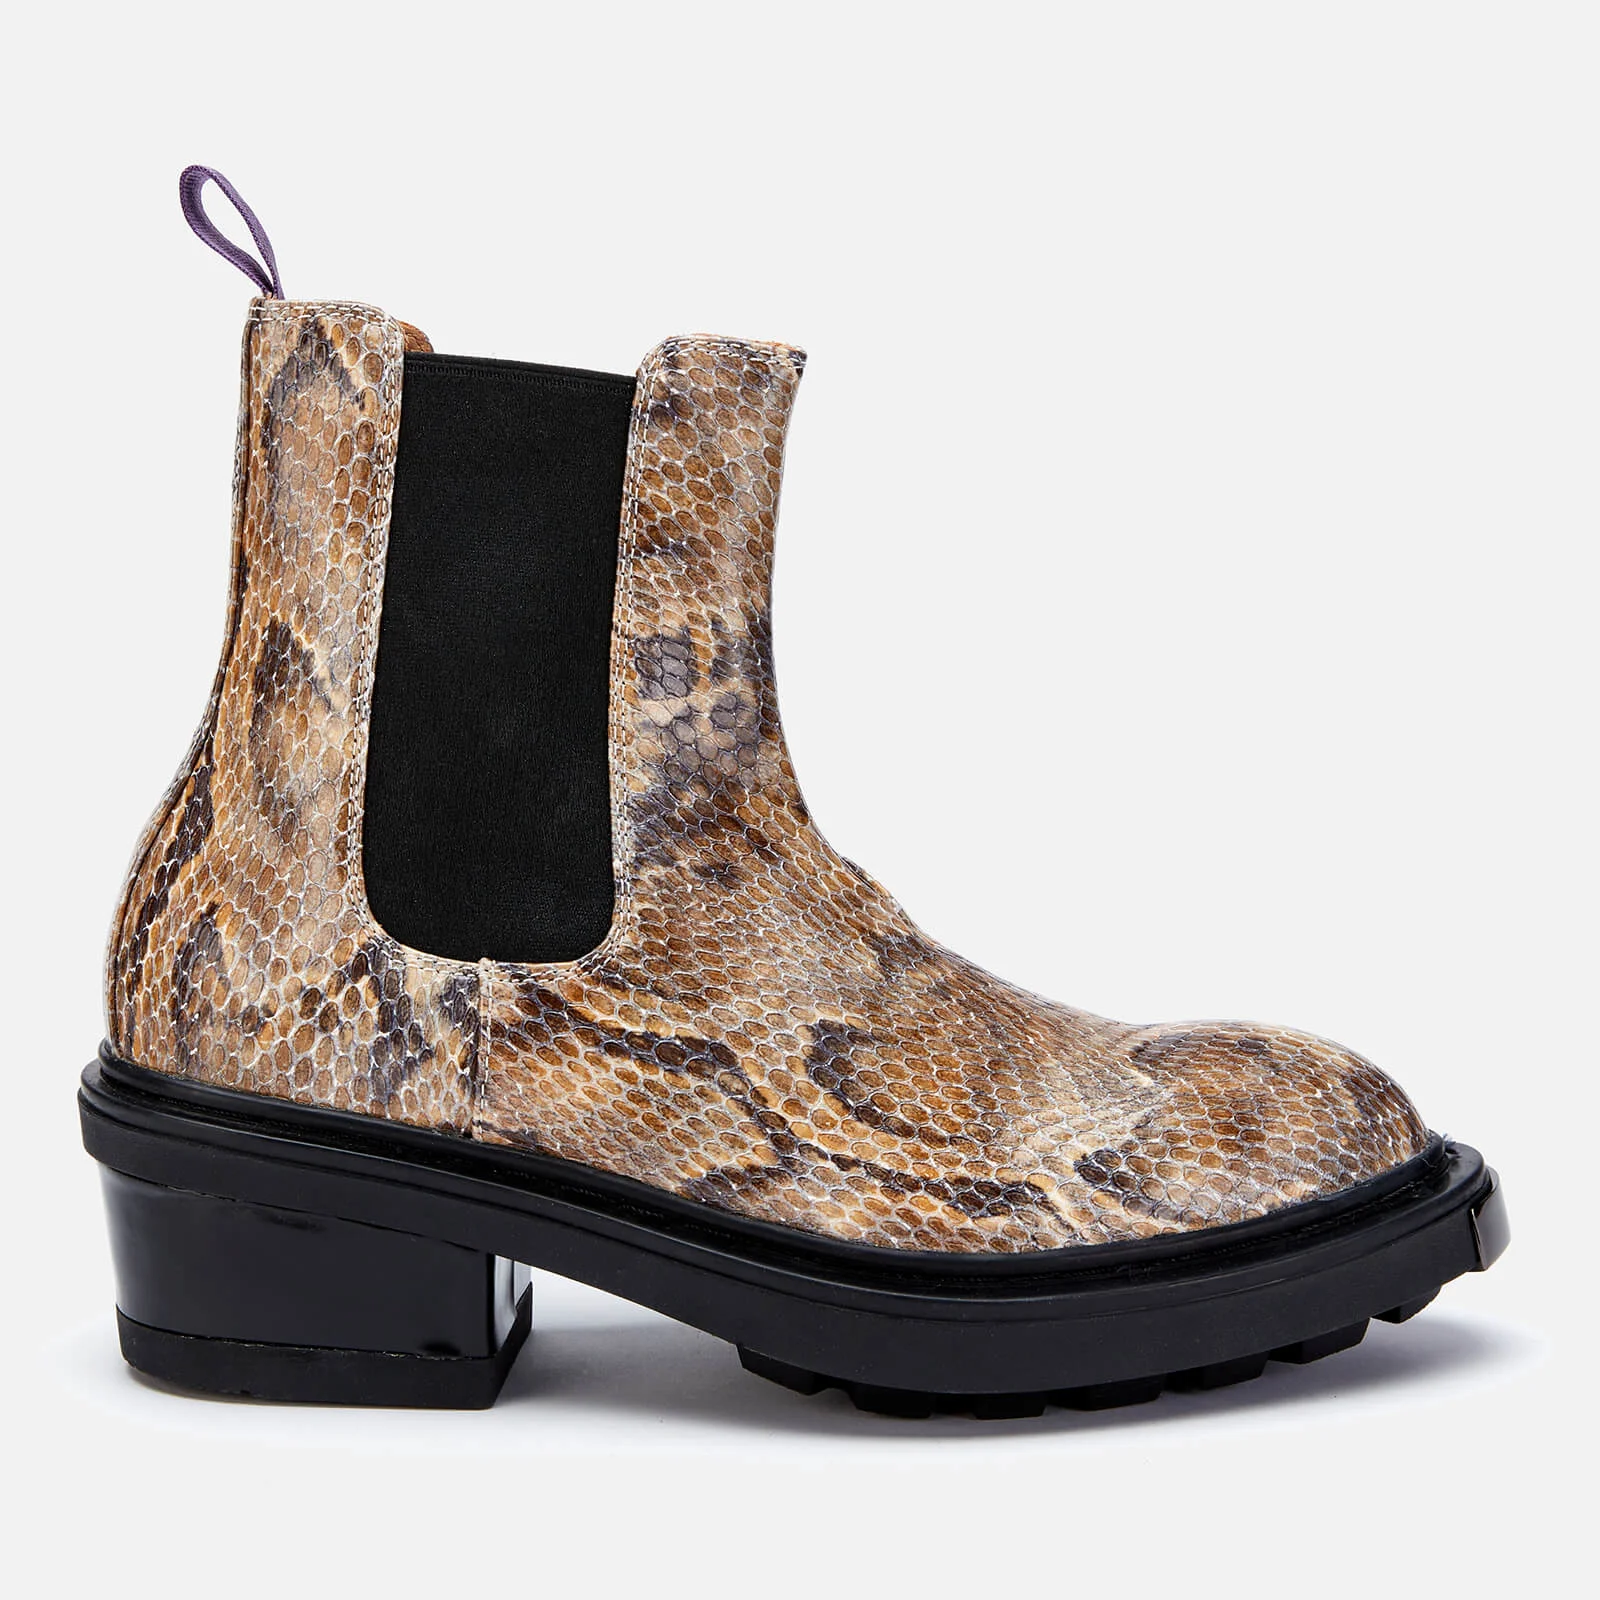 Eytys Nikita Leather Python Print Chelsea Boots - Multi Image 1